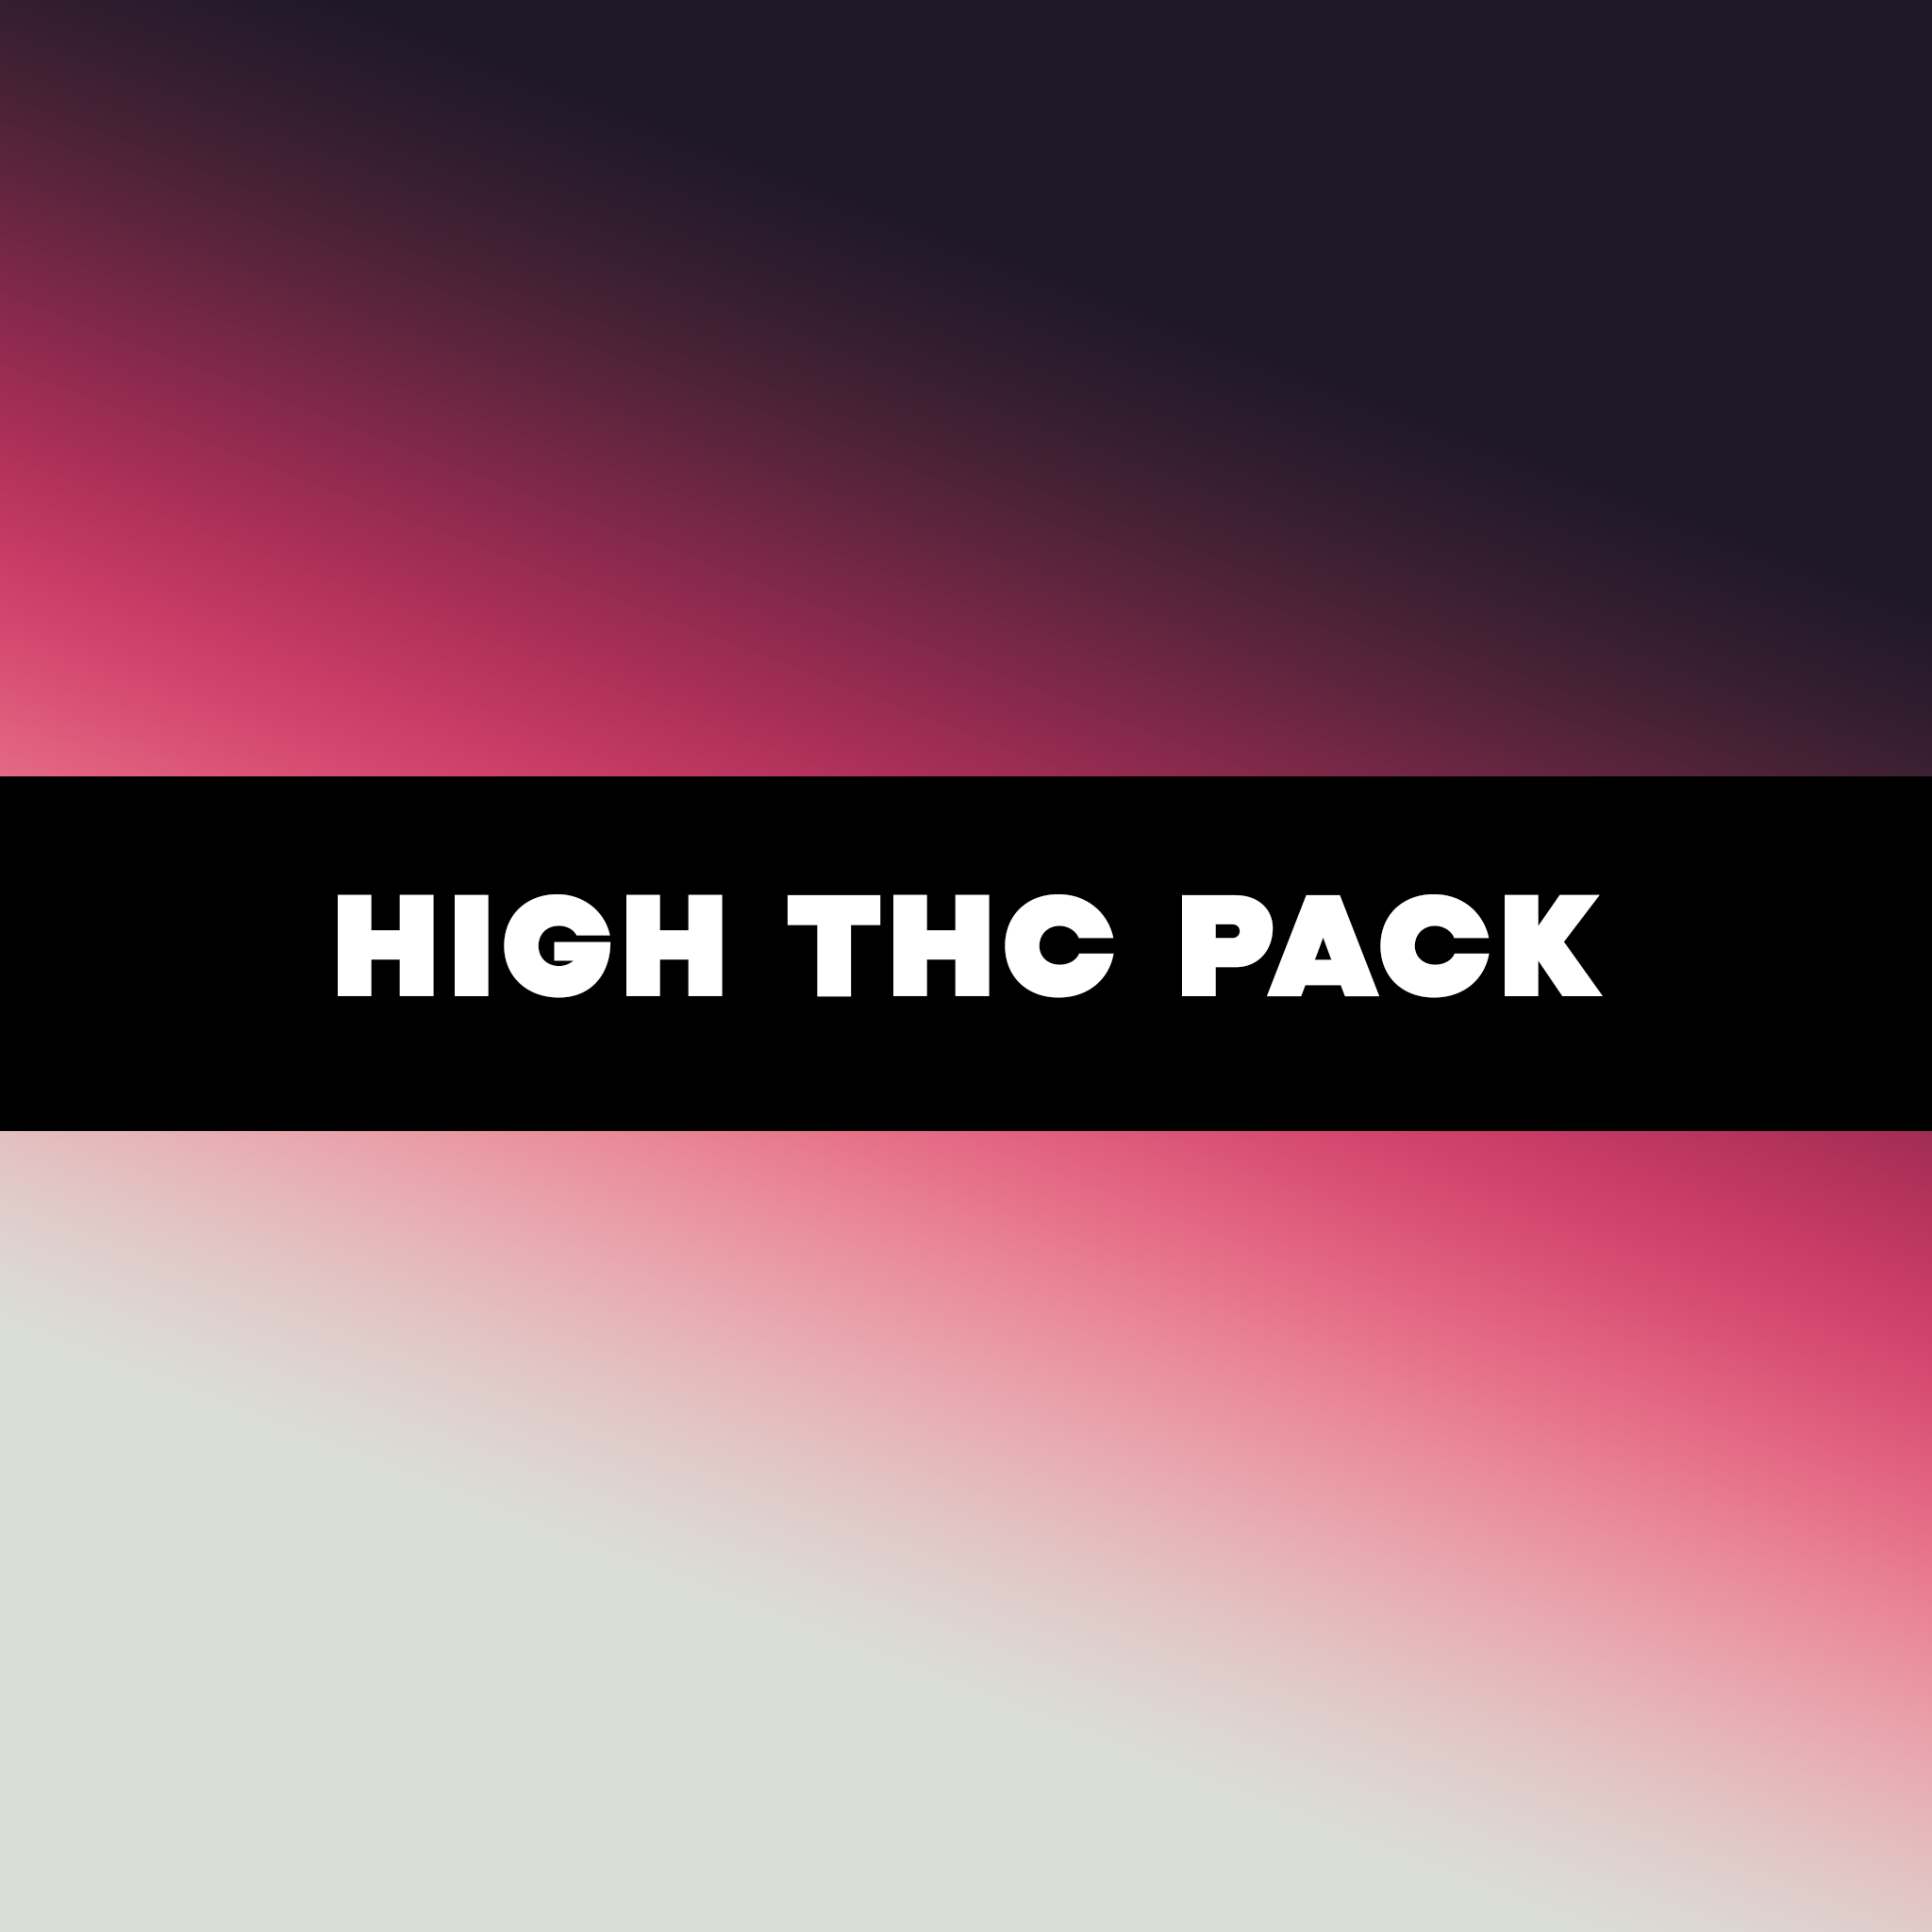 High THC Pack